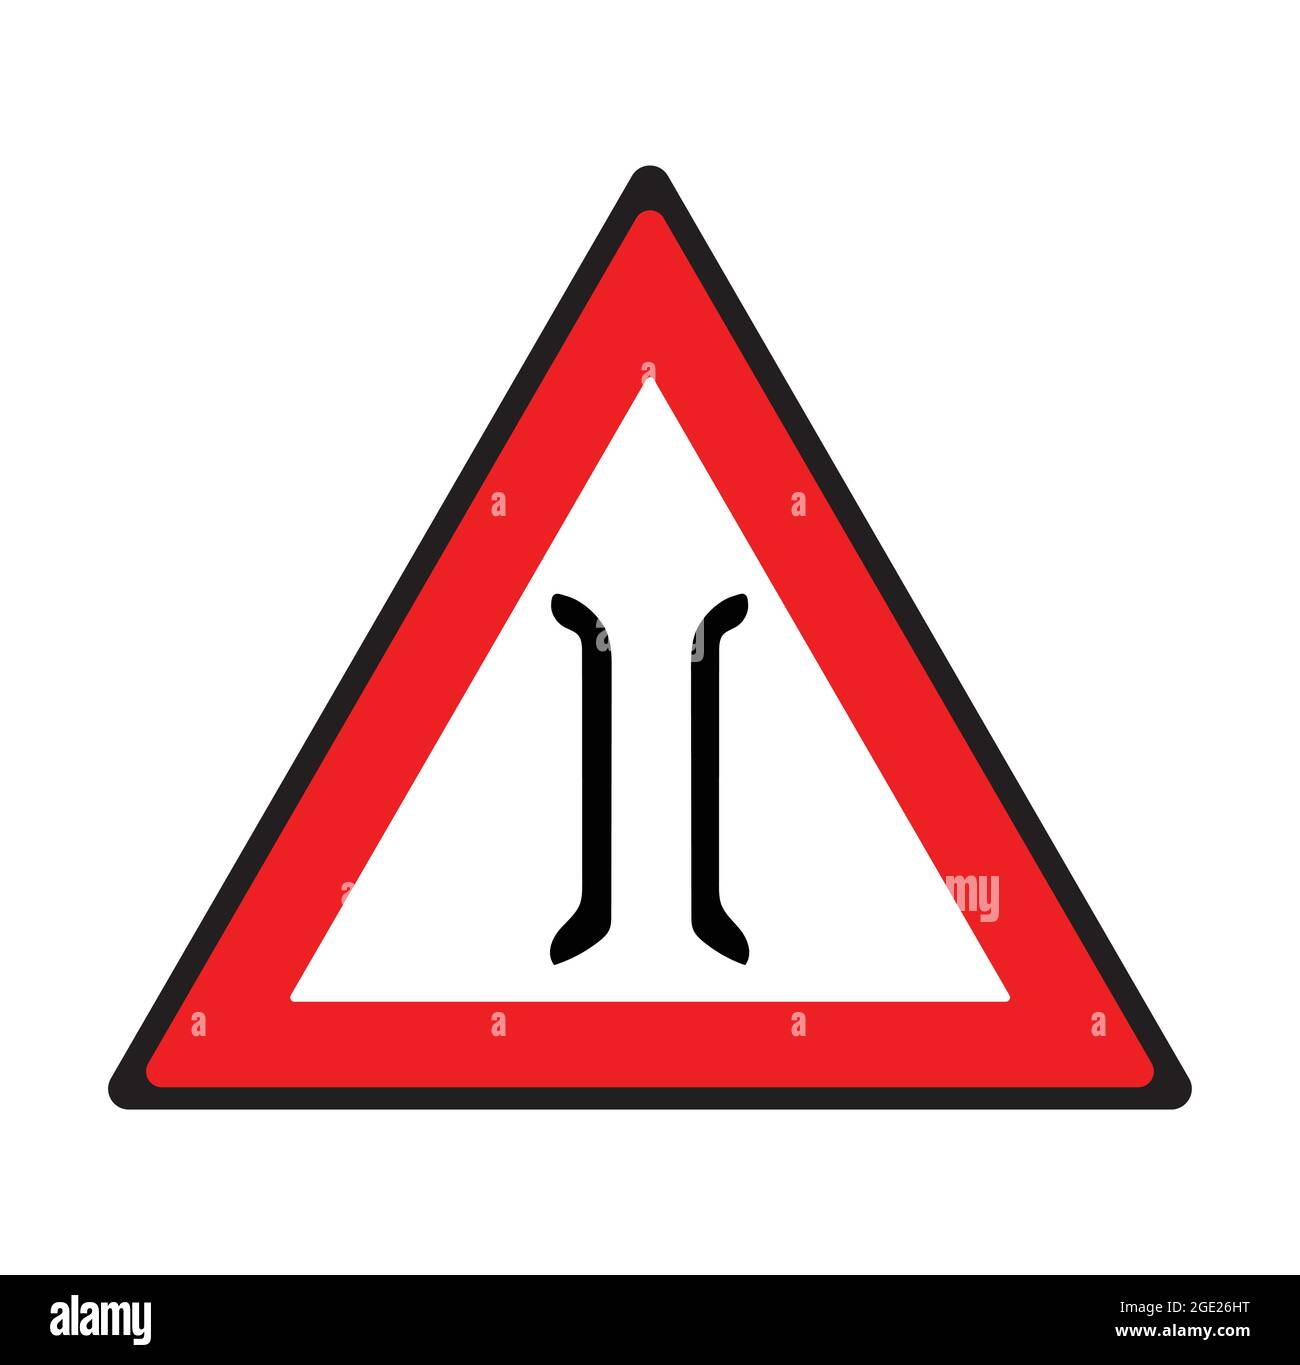 Narrow bridge road sign. Safety symbol. Stock Vector